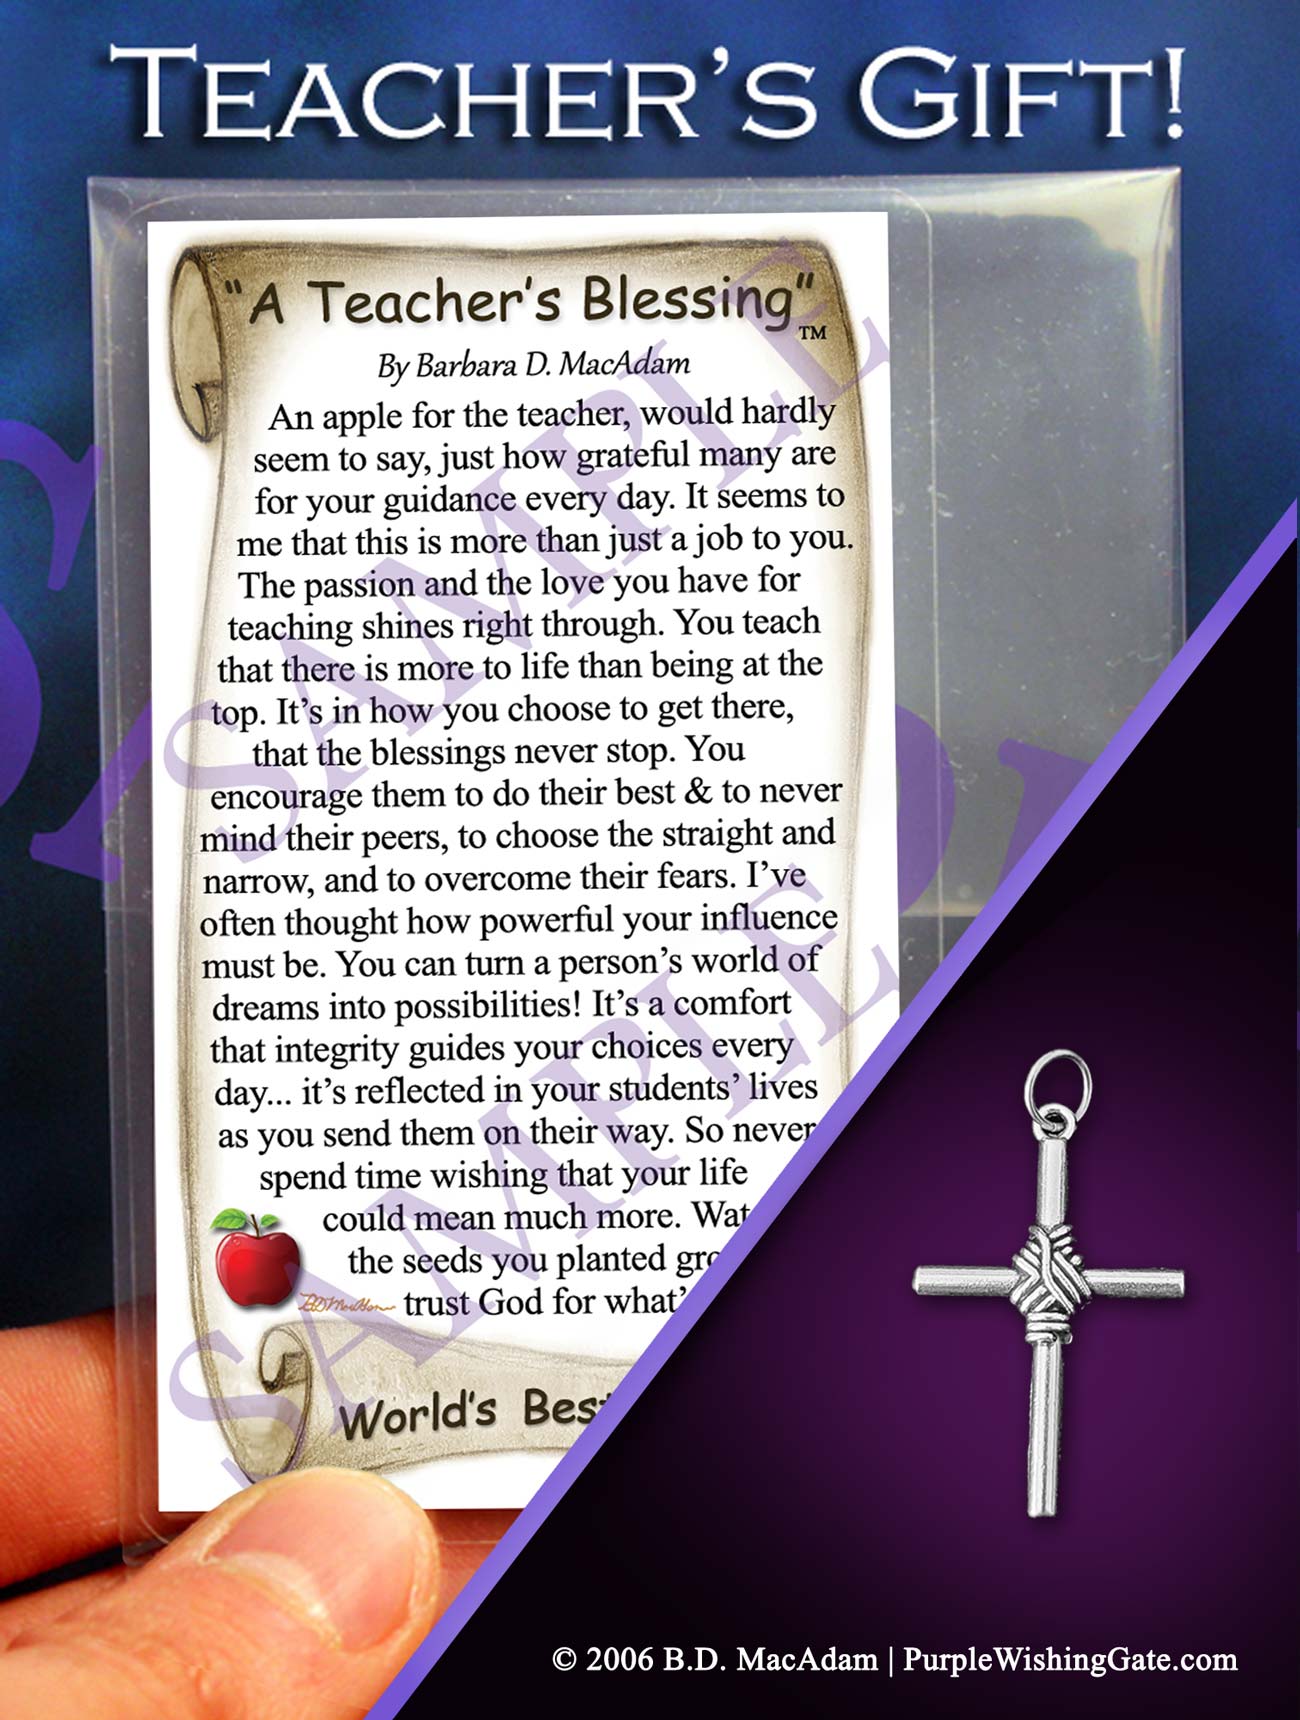 A Teacher's Pocket Blessing